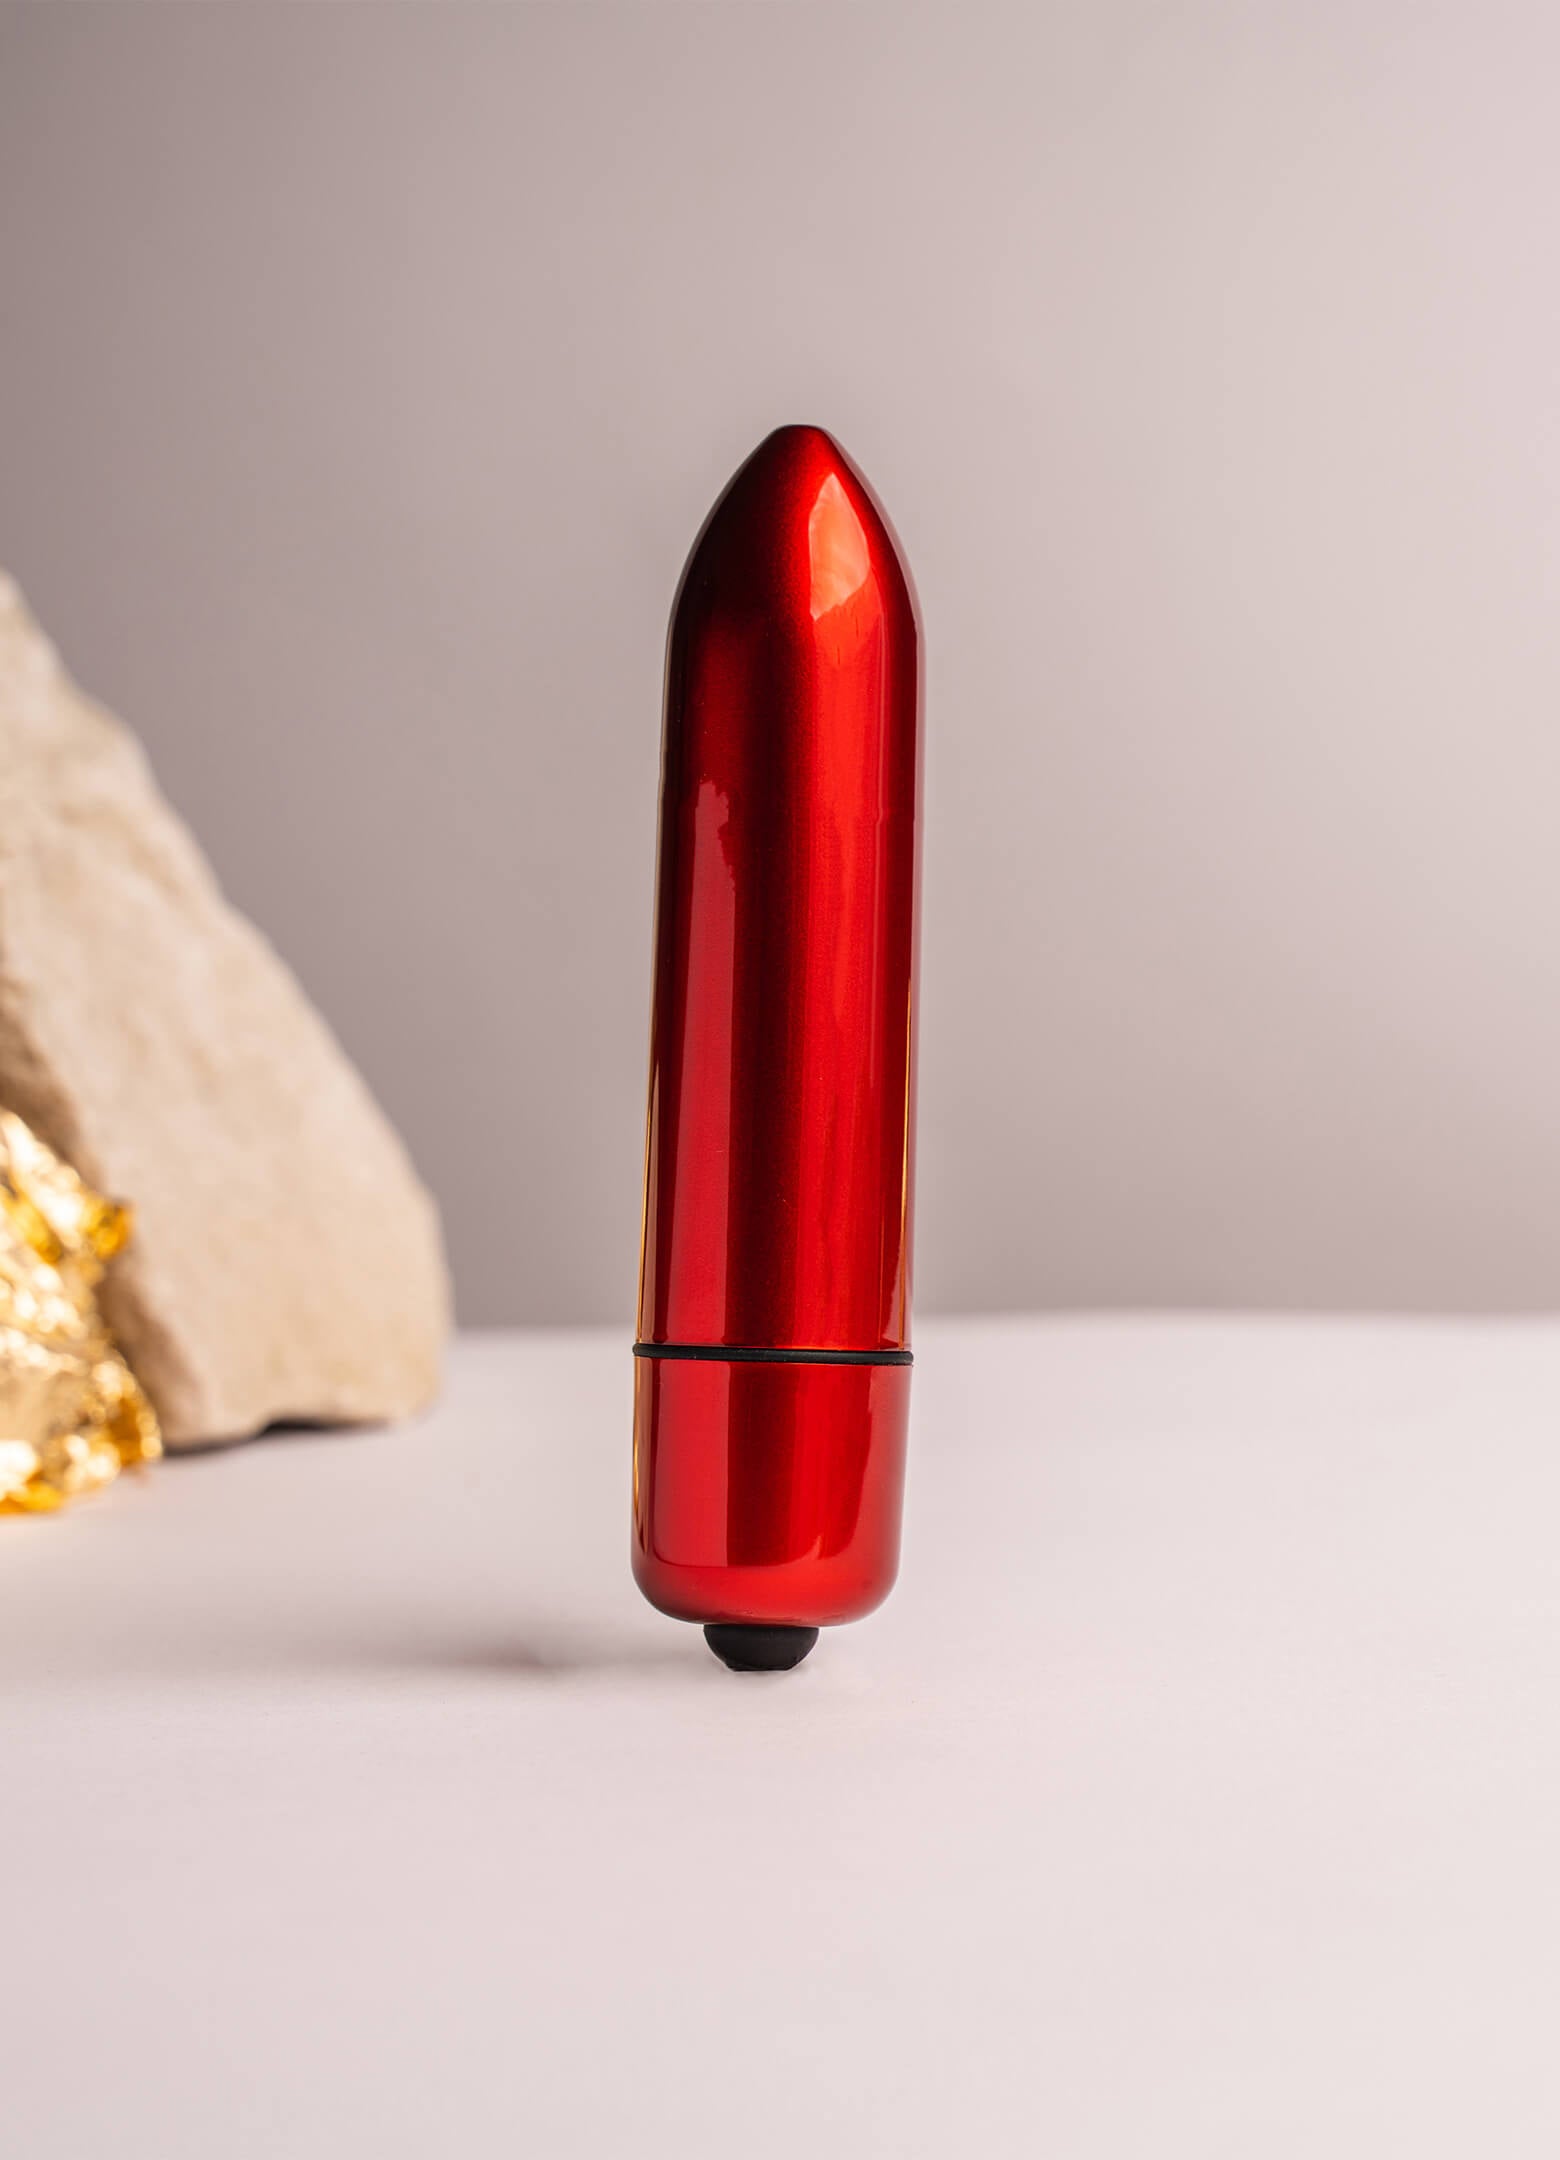 Medium sized girthy bullet vibrator in gloss red.